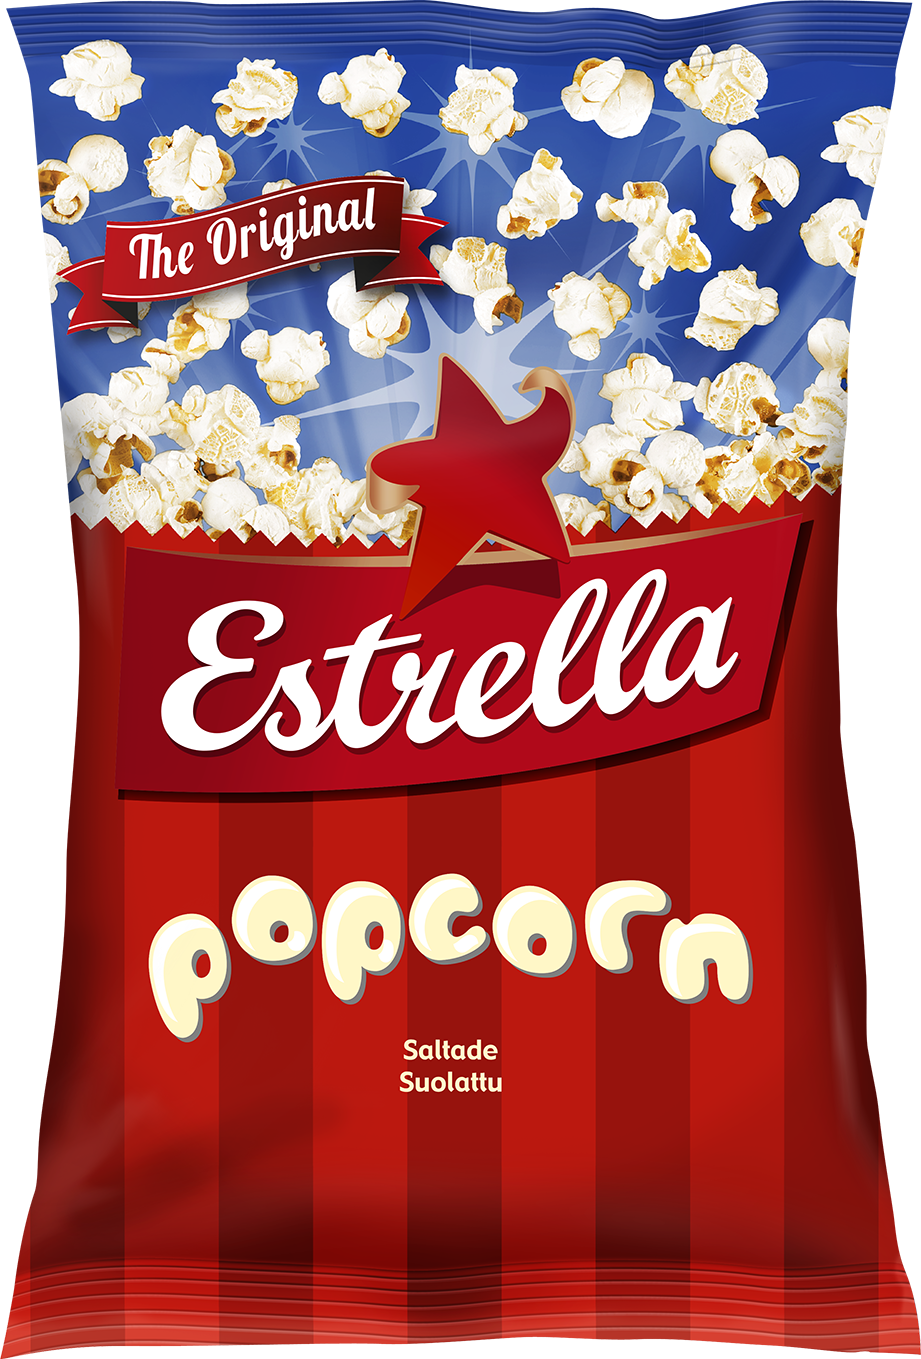 Estrella Popcorn 65g